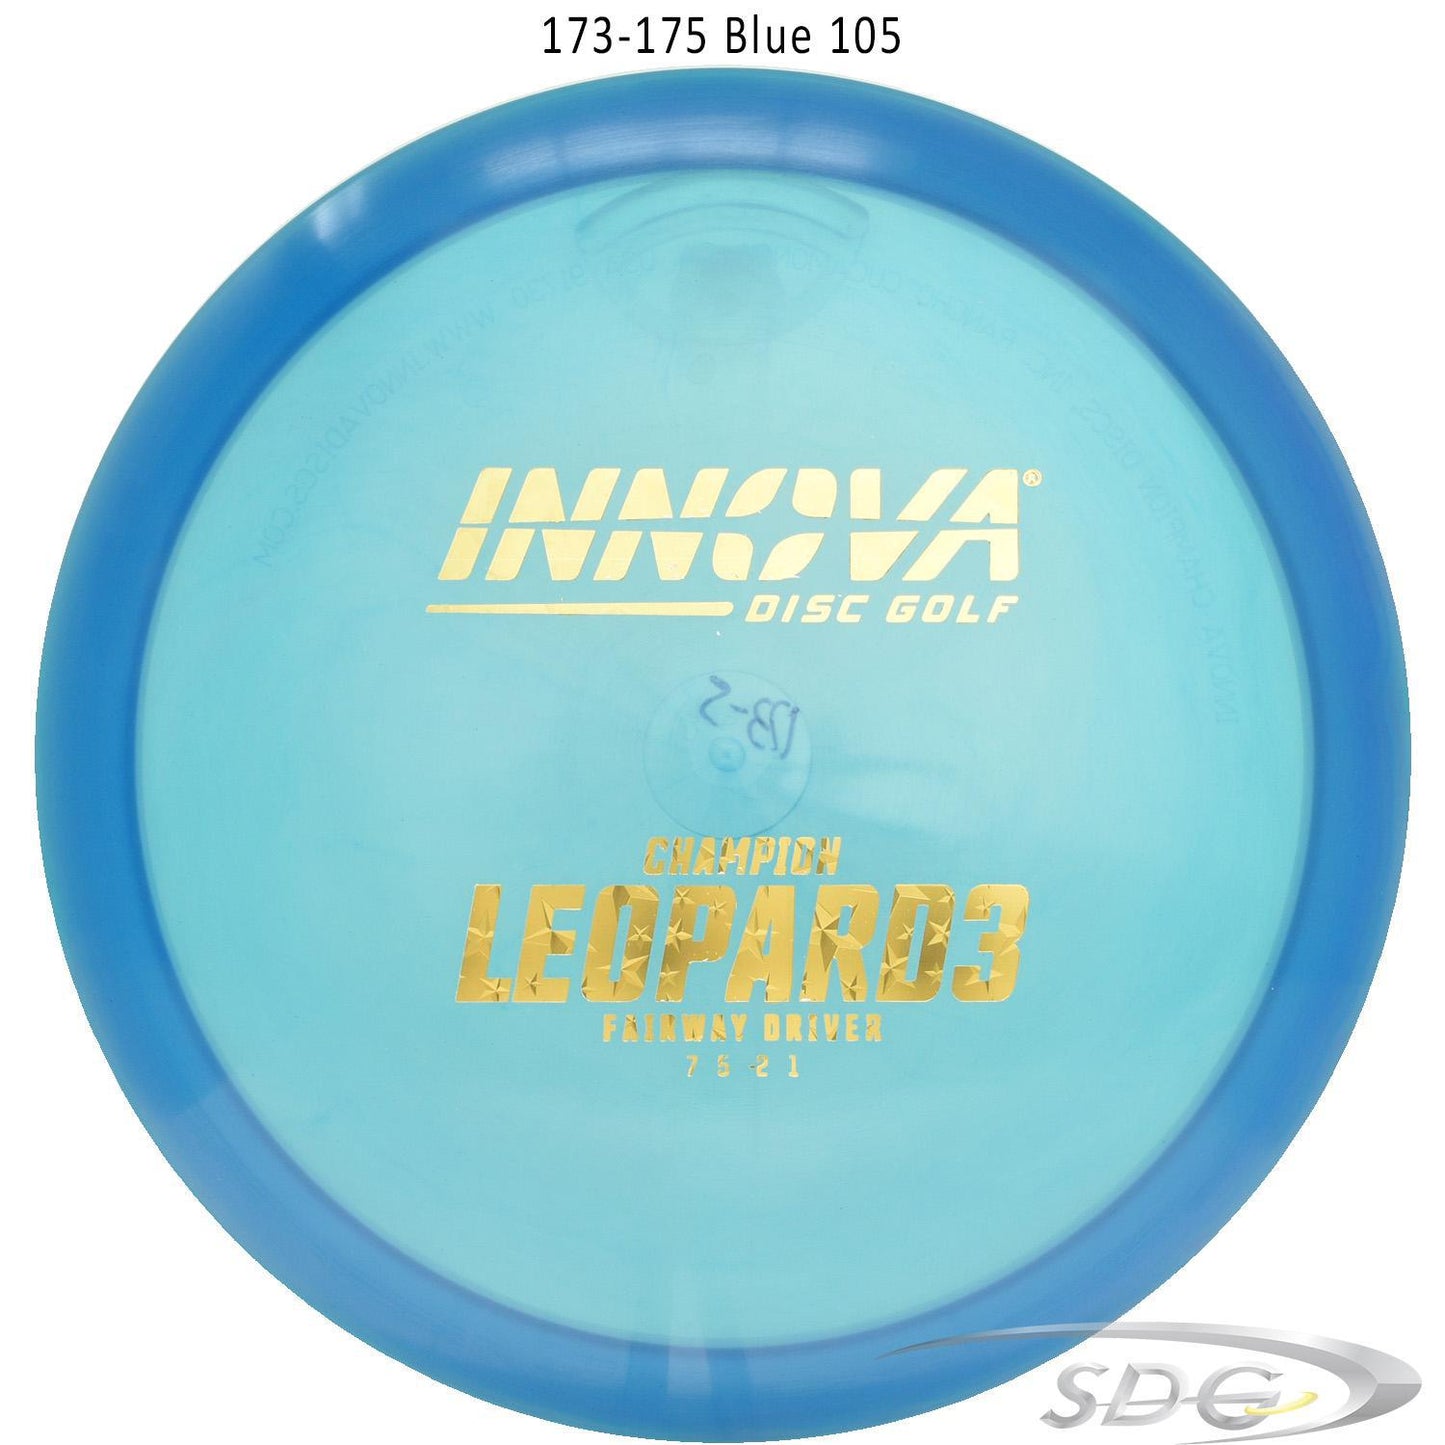 innova-champion-leopard3-disc-golf-fairway-driver 173-175 Blue 105 